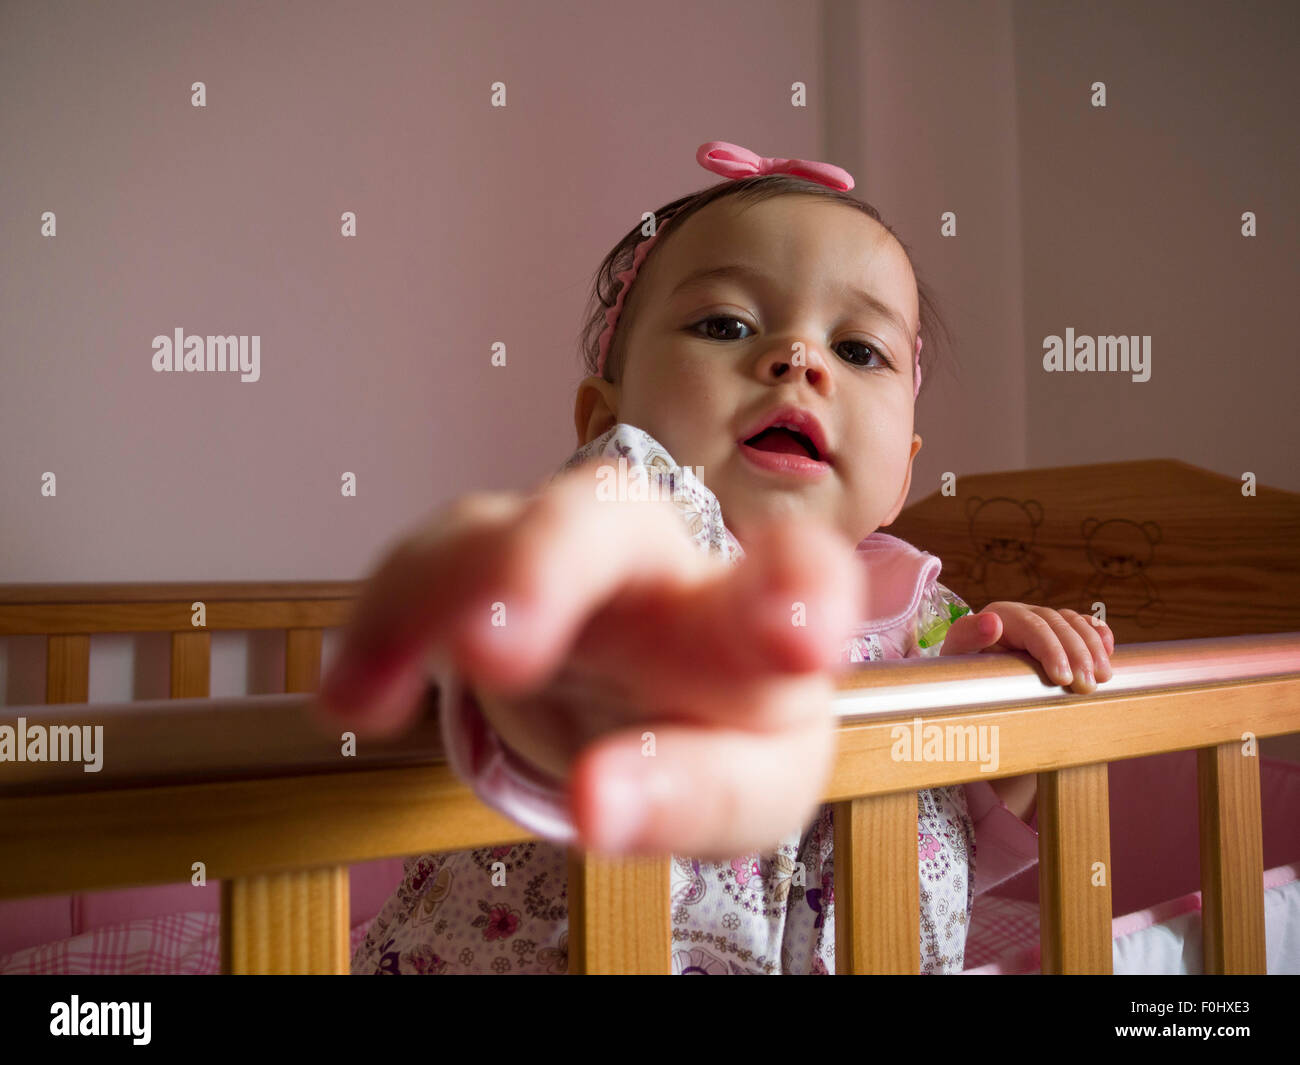 Baby girl inside crib pointing at camera Stock Photo